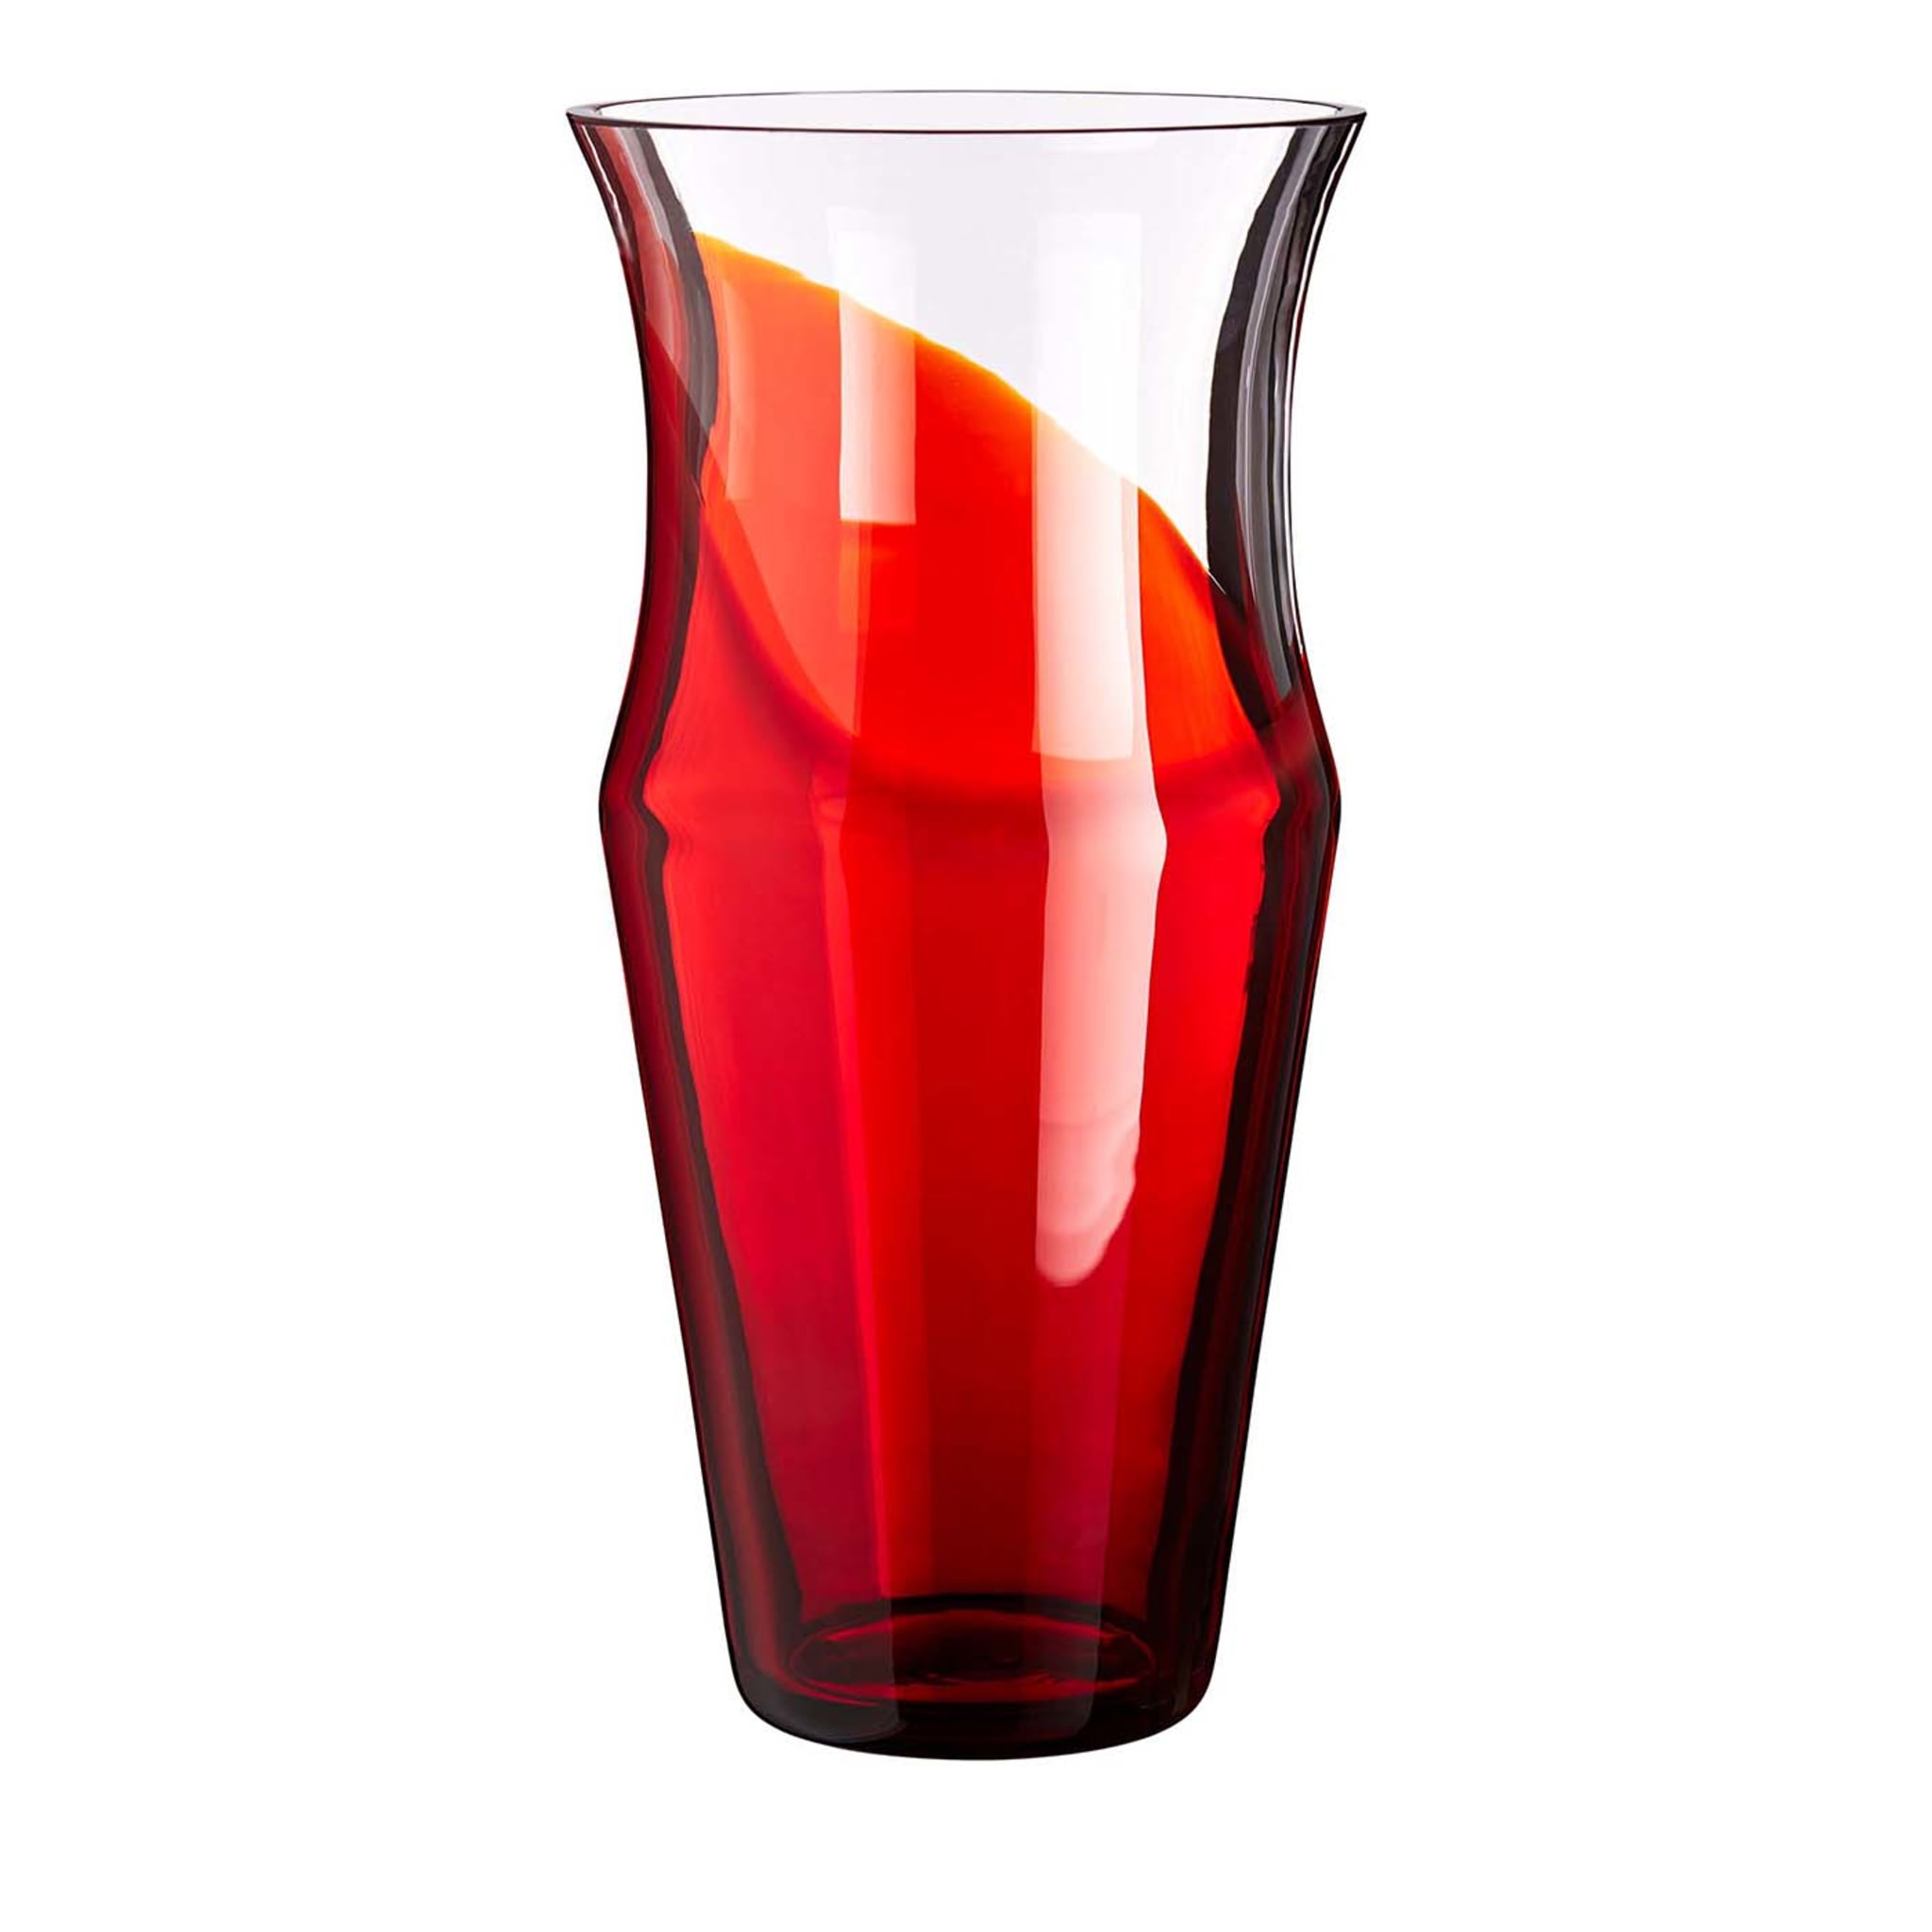 Rote und transparente Monocromo-Vase von Carlo Moretti - Hauptansicht